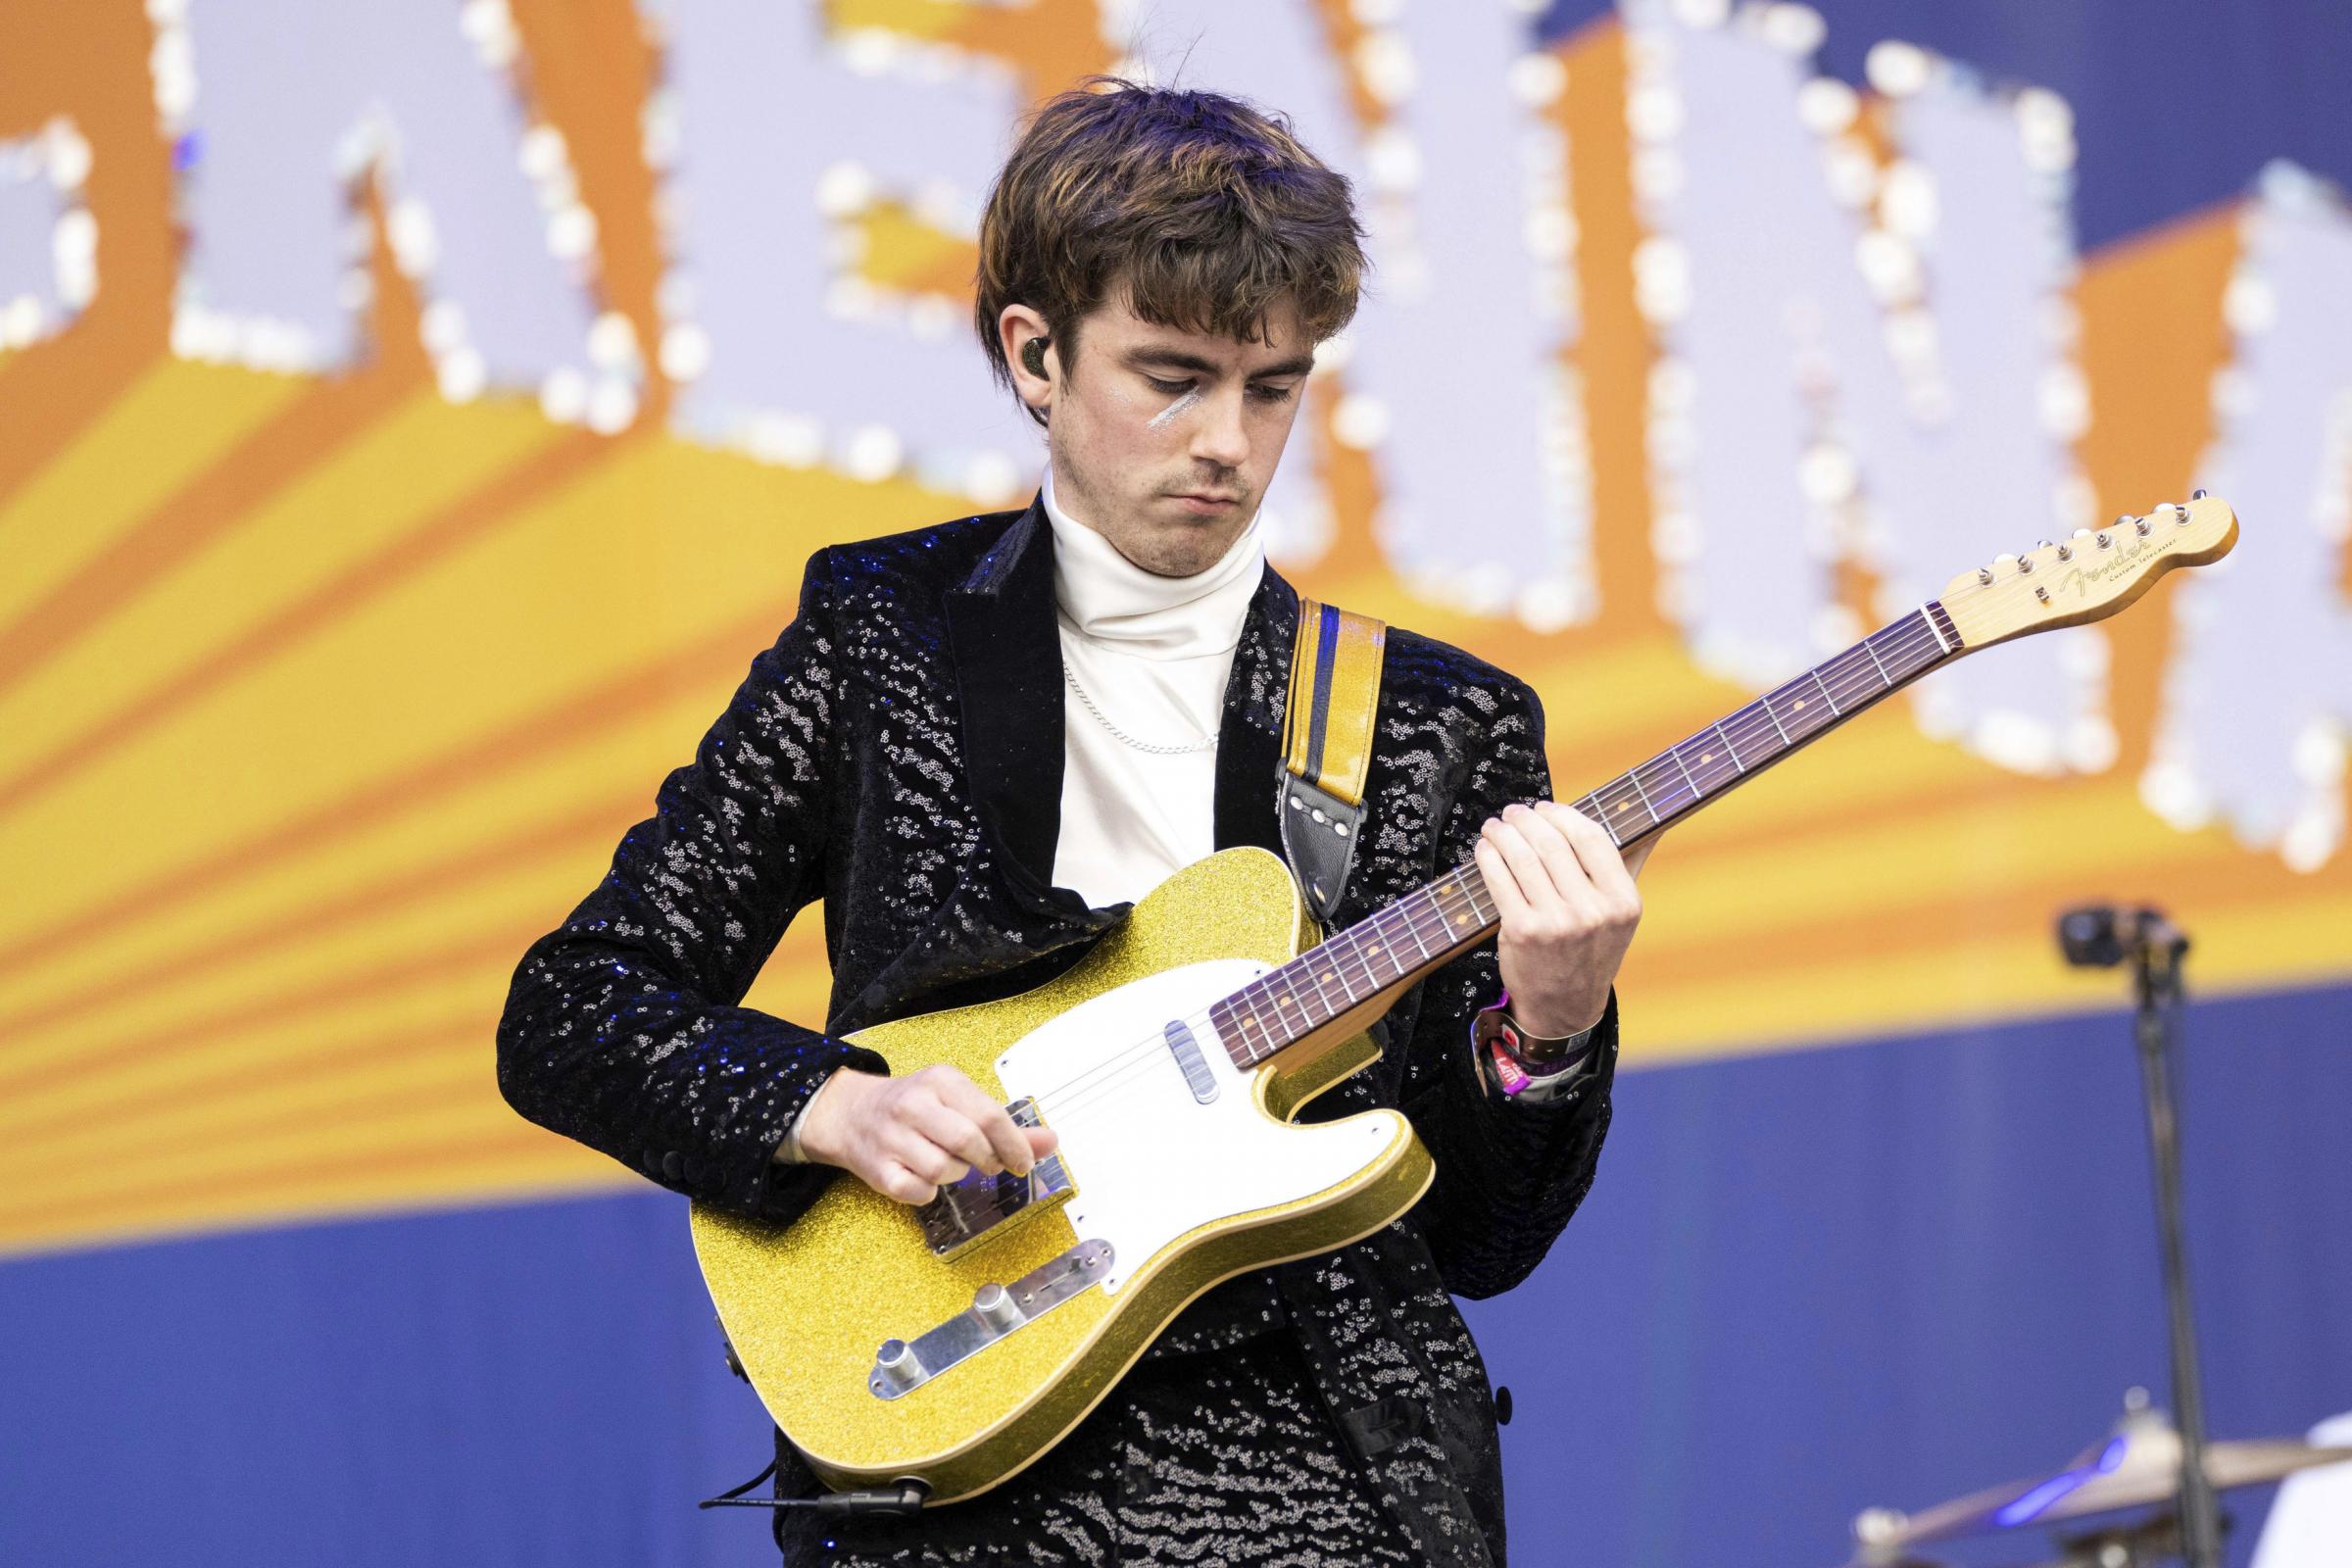 Declan McKenna performs at the Reading Music Festival, England, Friday, Aug. 27, 2021. (AP Photo/Scott Garfitt).